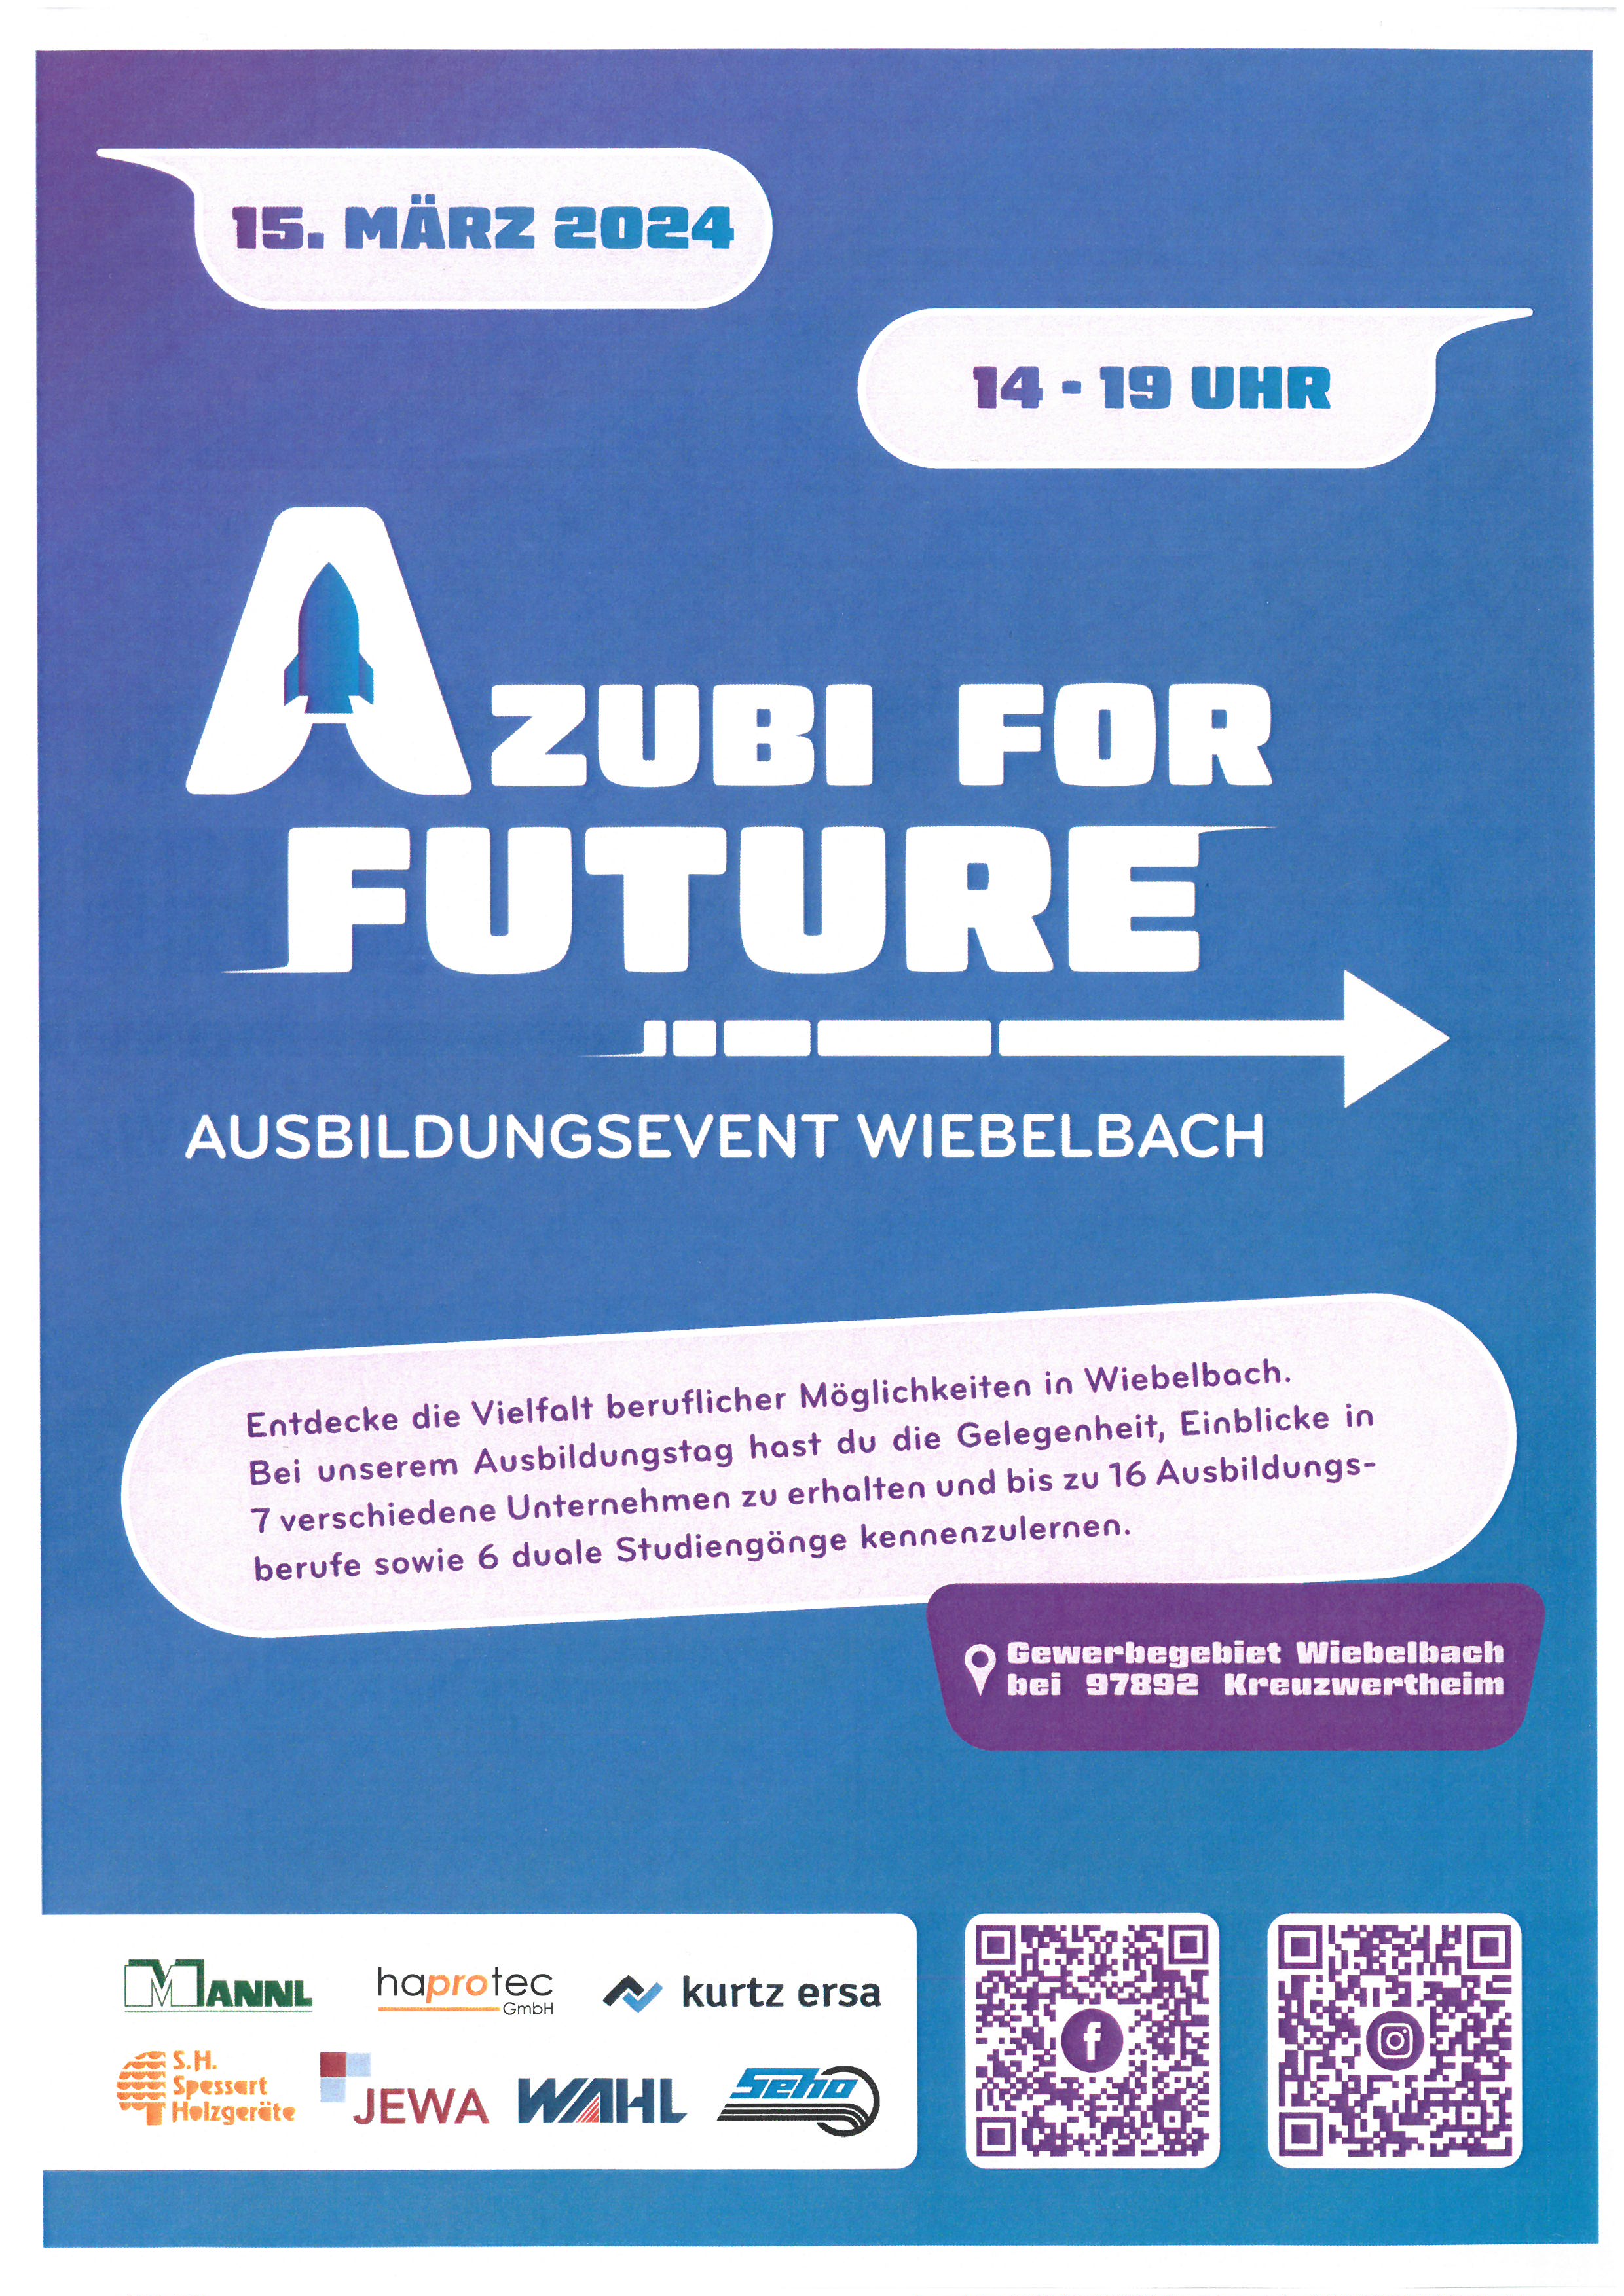 Ausbildungsevent am 15. März 2024 in Wiebelbach: Azubi for future